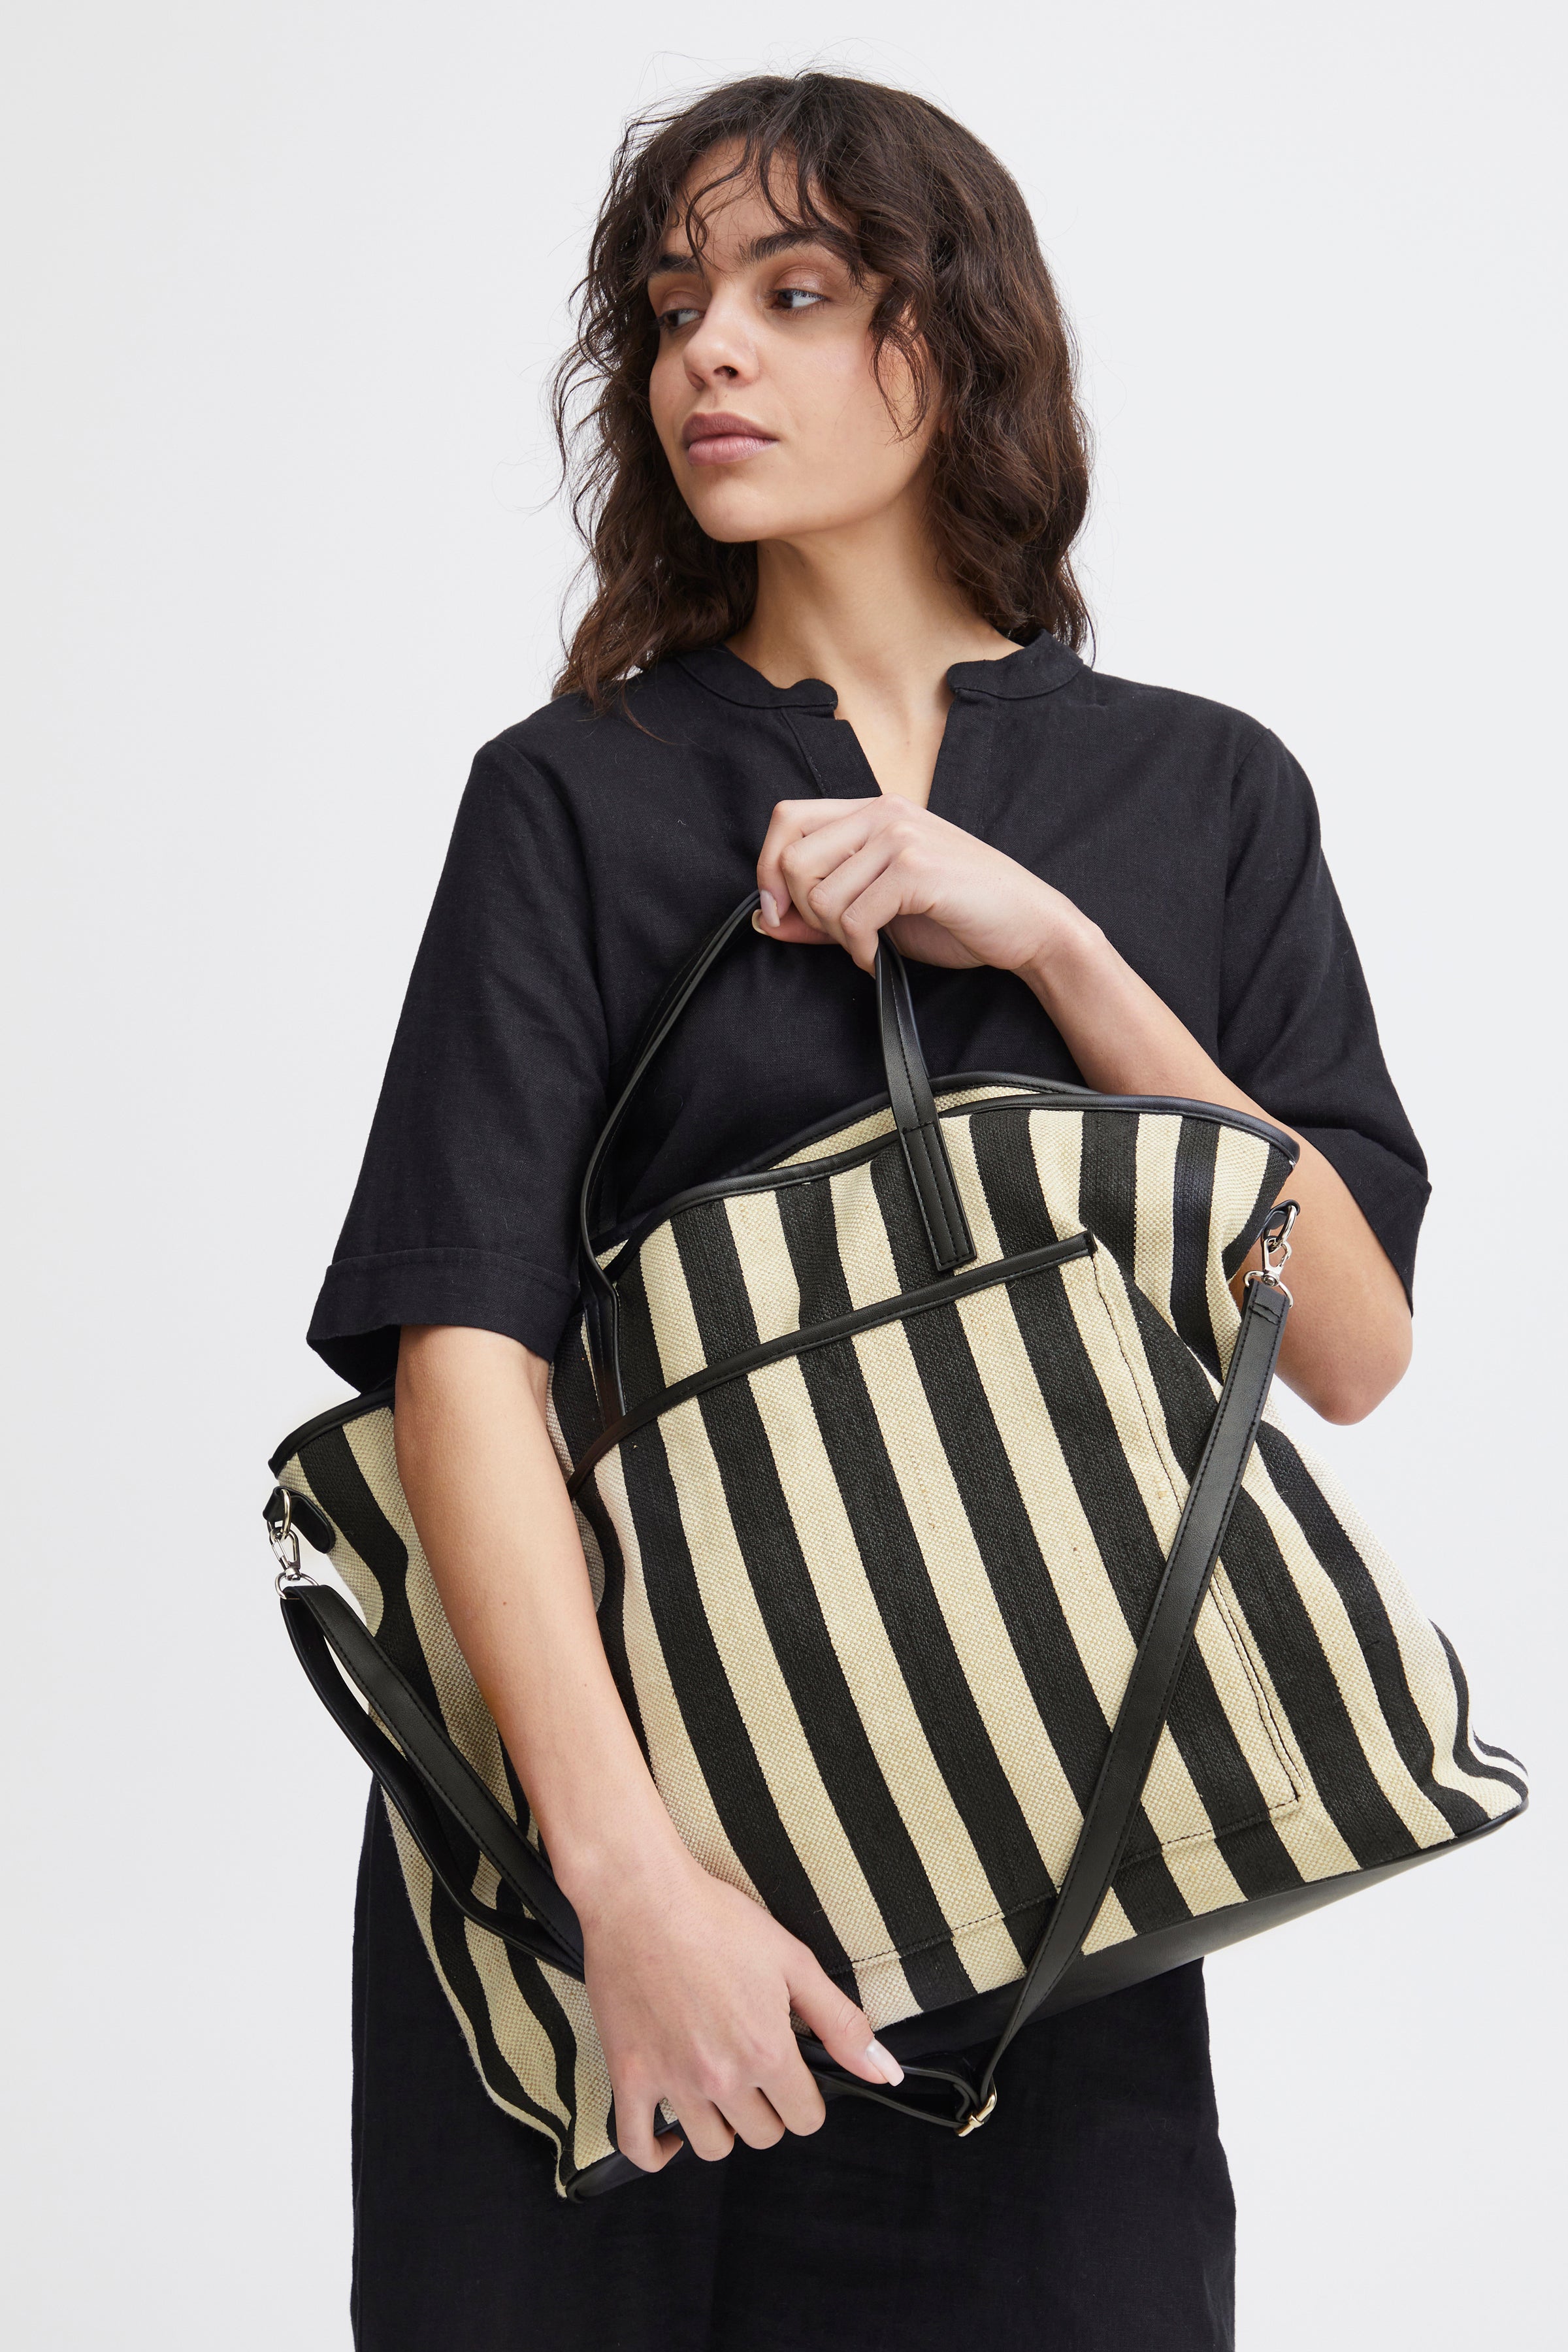 Nurra Striped Bag | Ichi